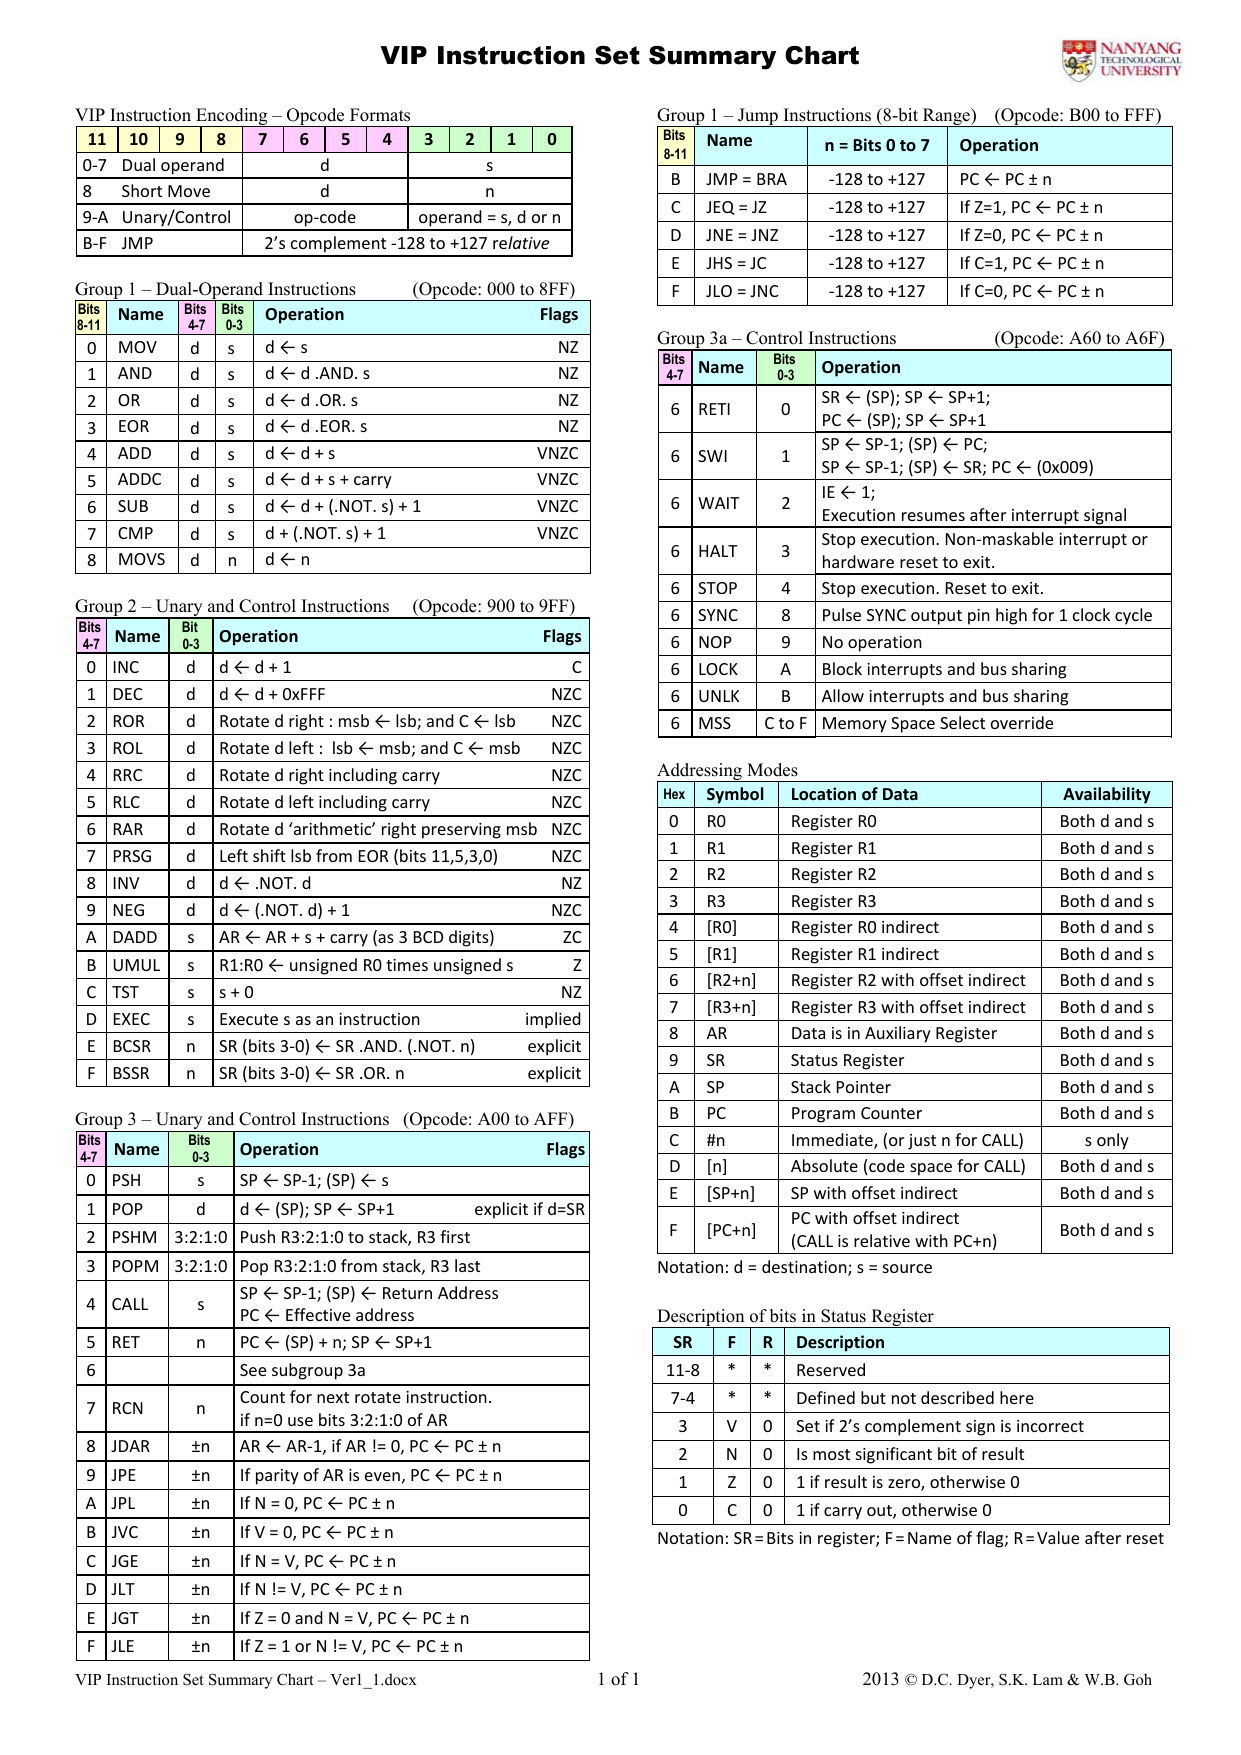 Vip Instruction Set Summary Chart Ver1 1